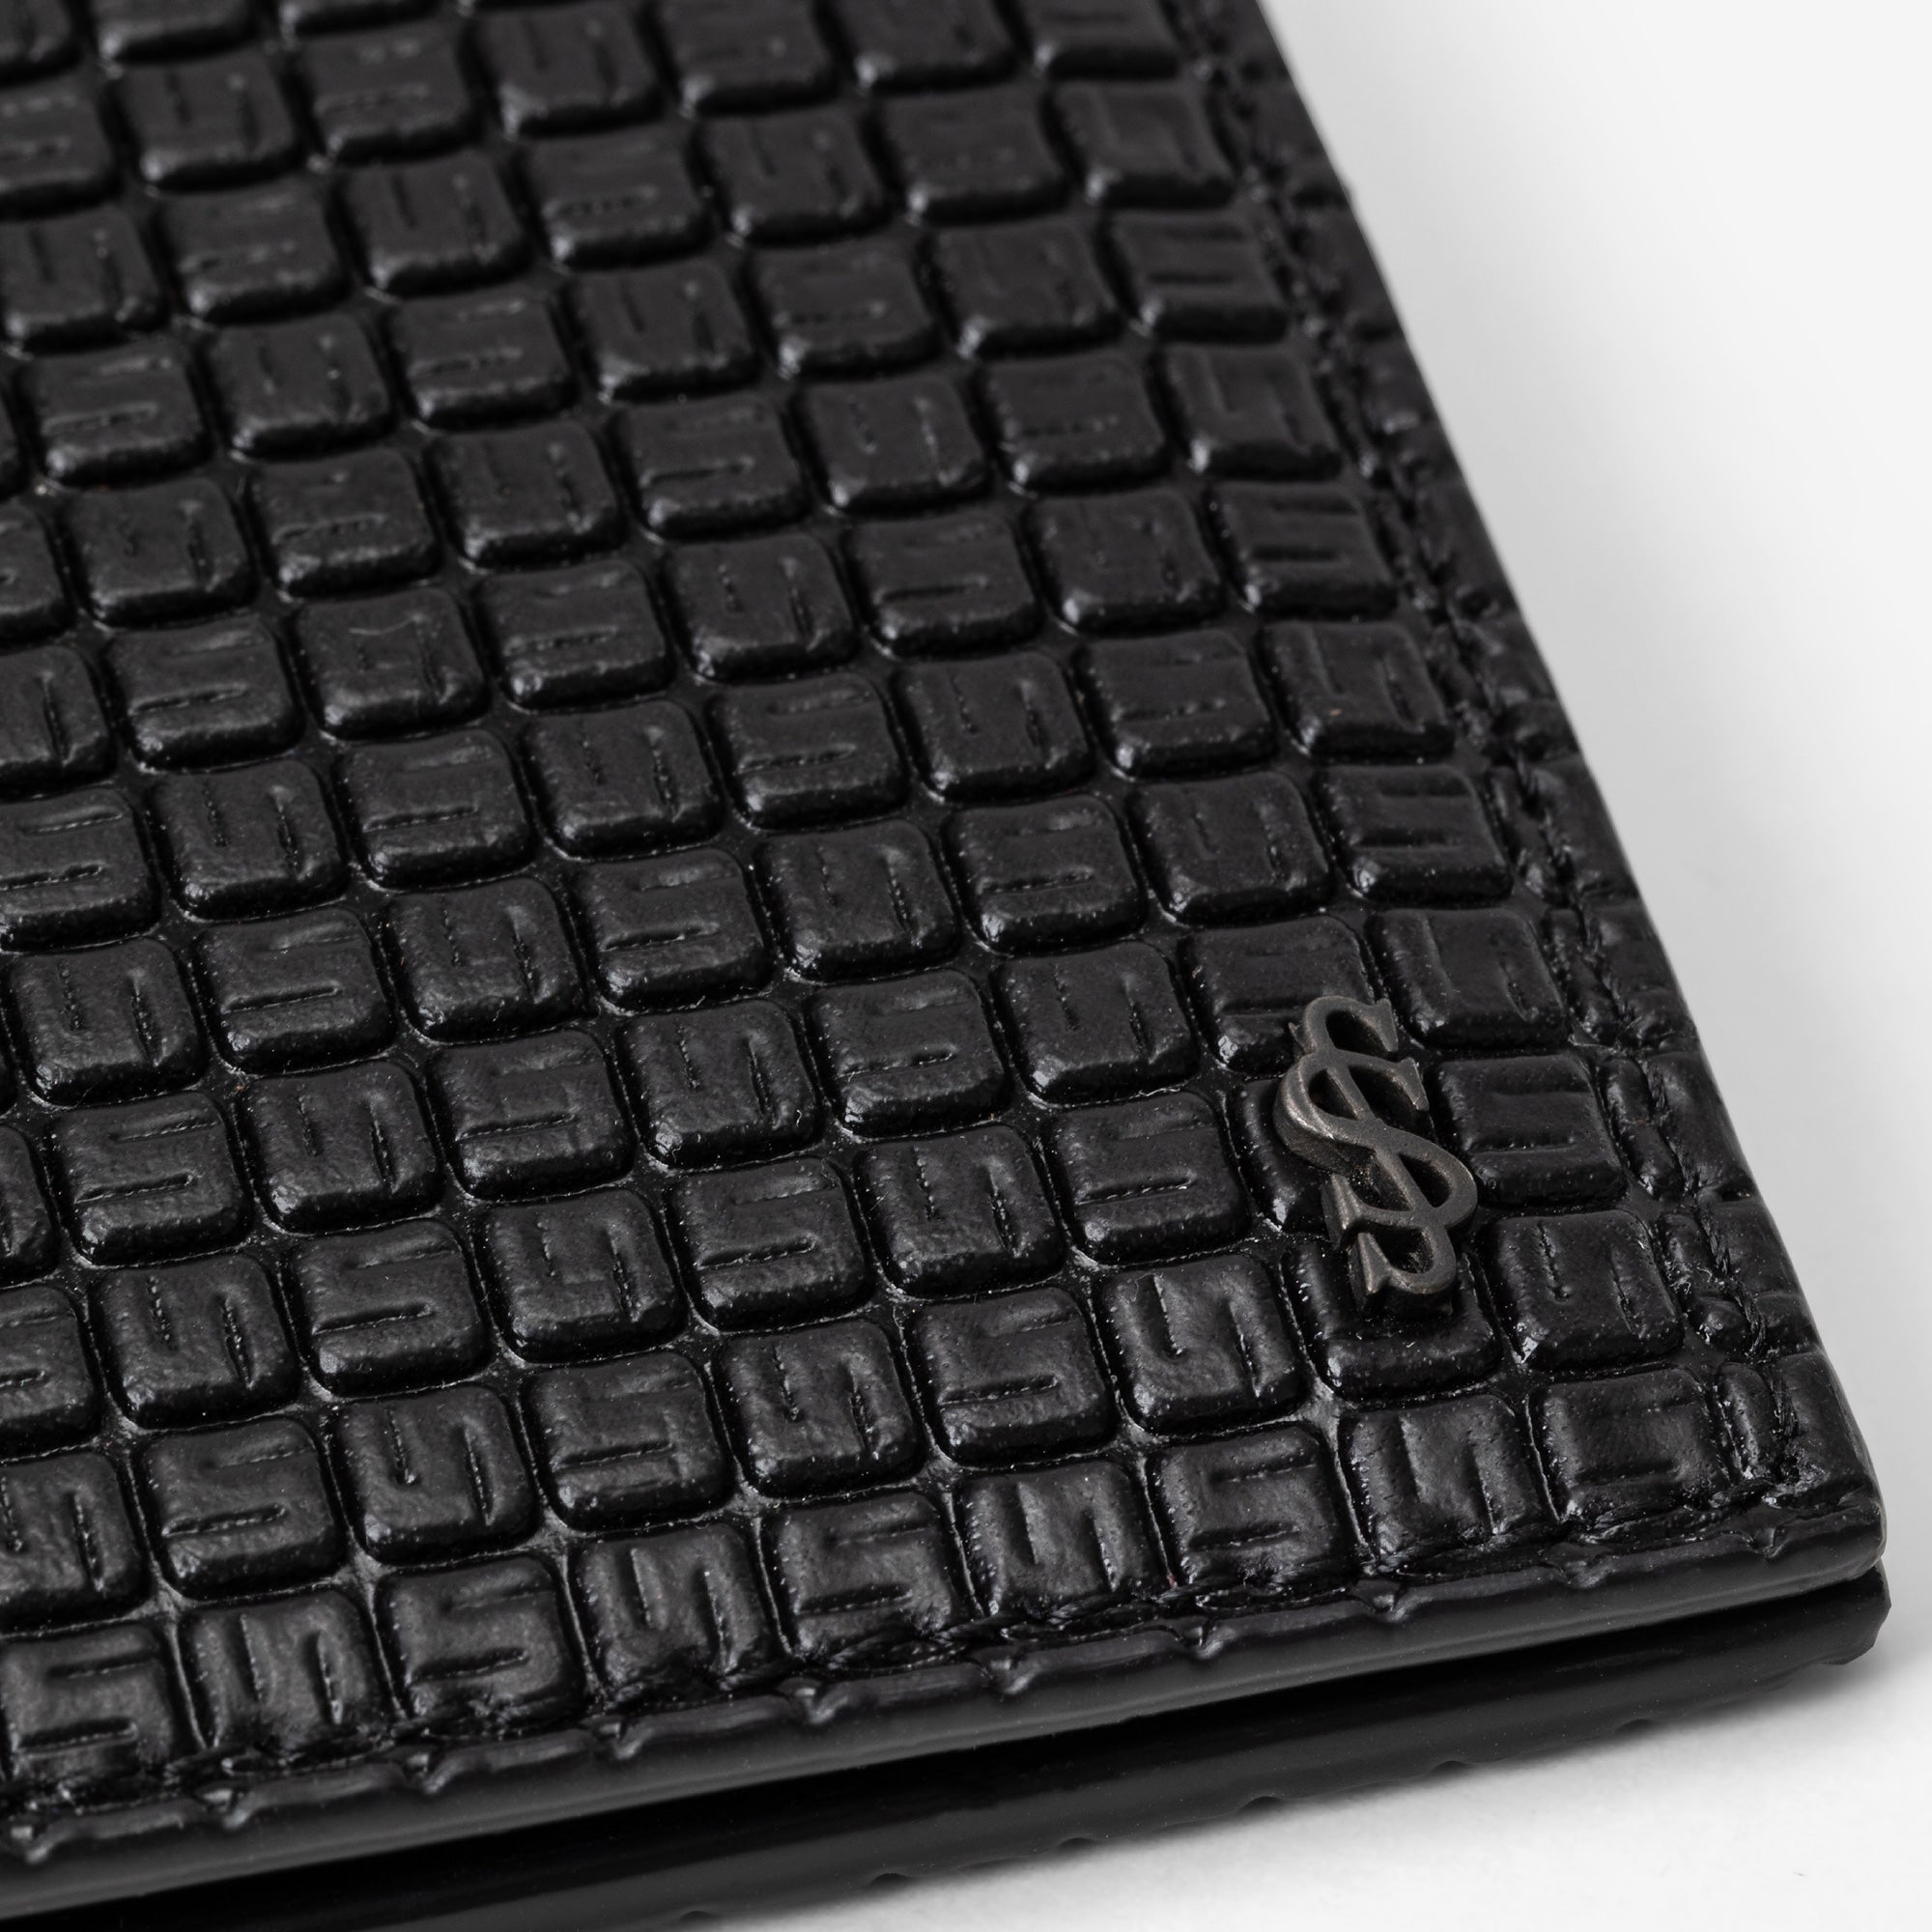 Serapian 8-Card Billfold Wallet in Evoluzione Leather, Man, Eclipse Black